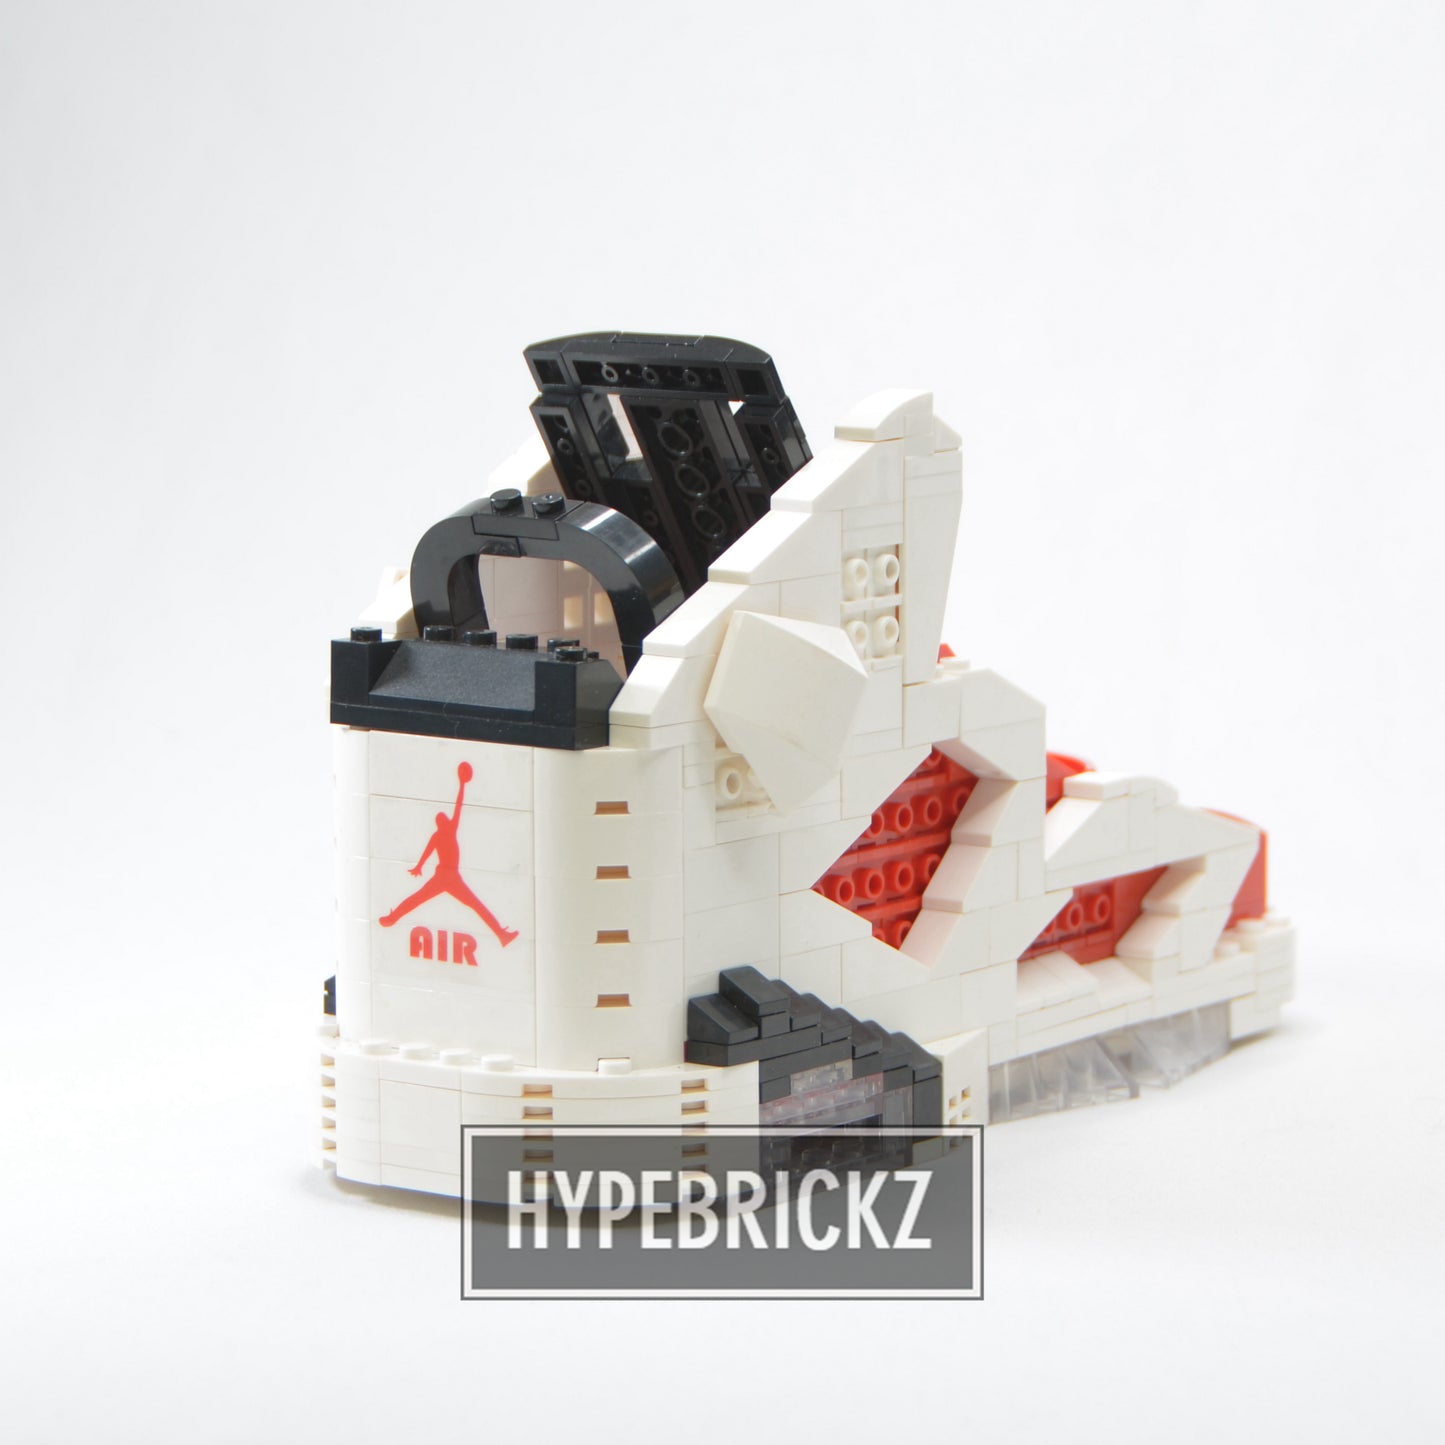 LARGE AJ6 "Carmine" Sneaker Bricks Sneaker 3D Puzzle Building Toy with Mini Figure